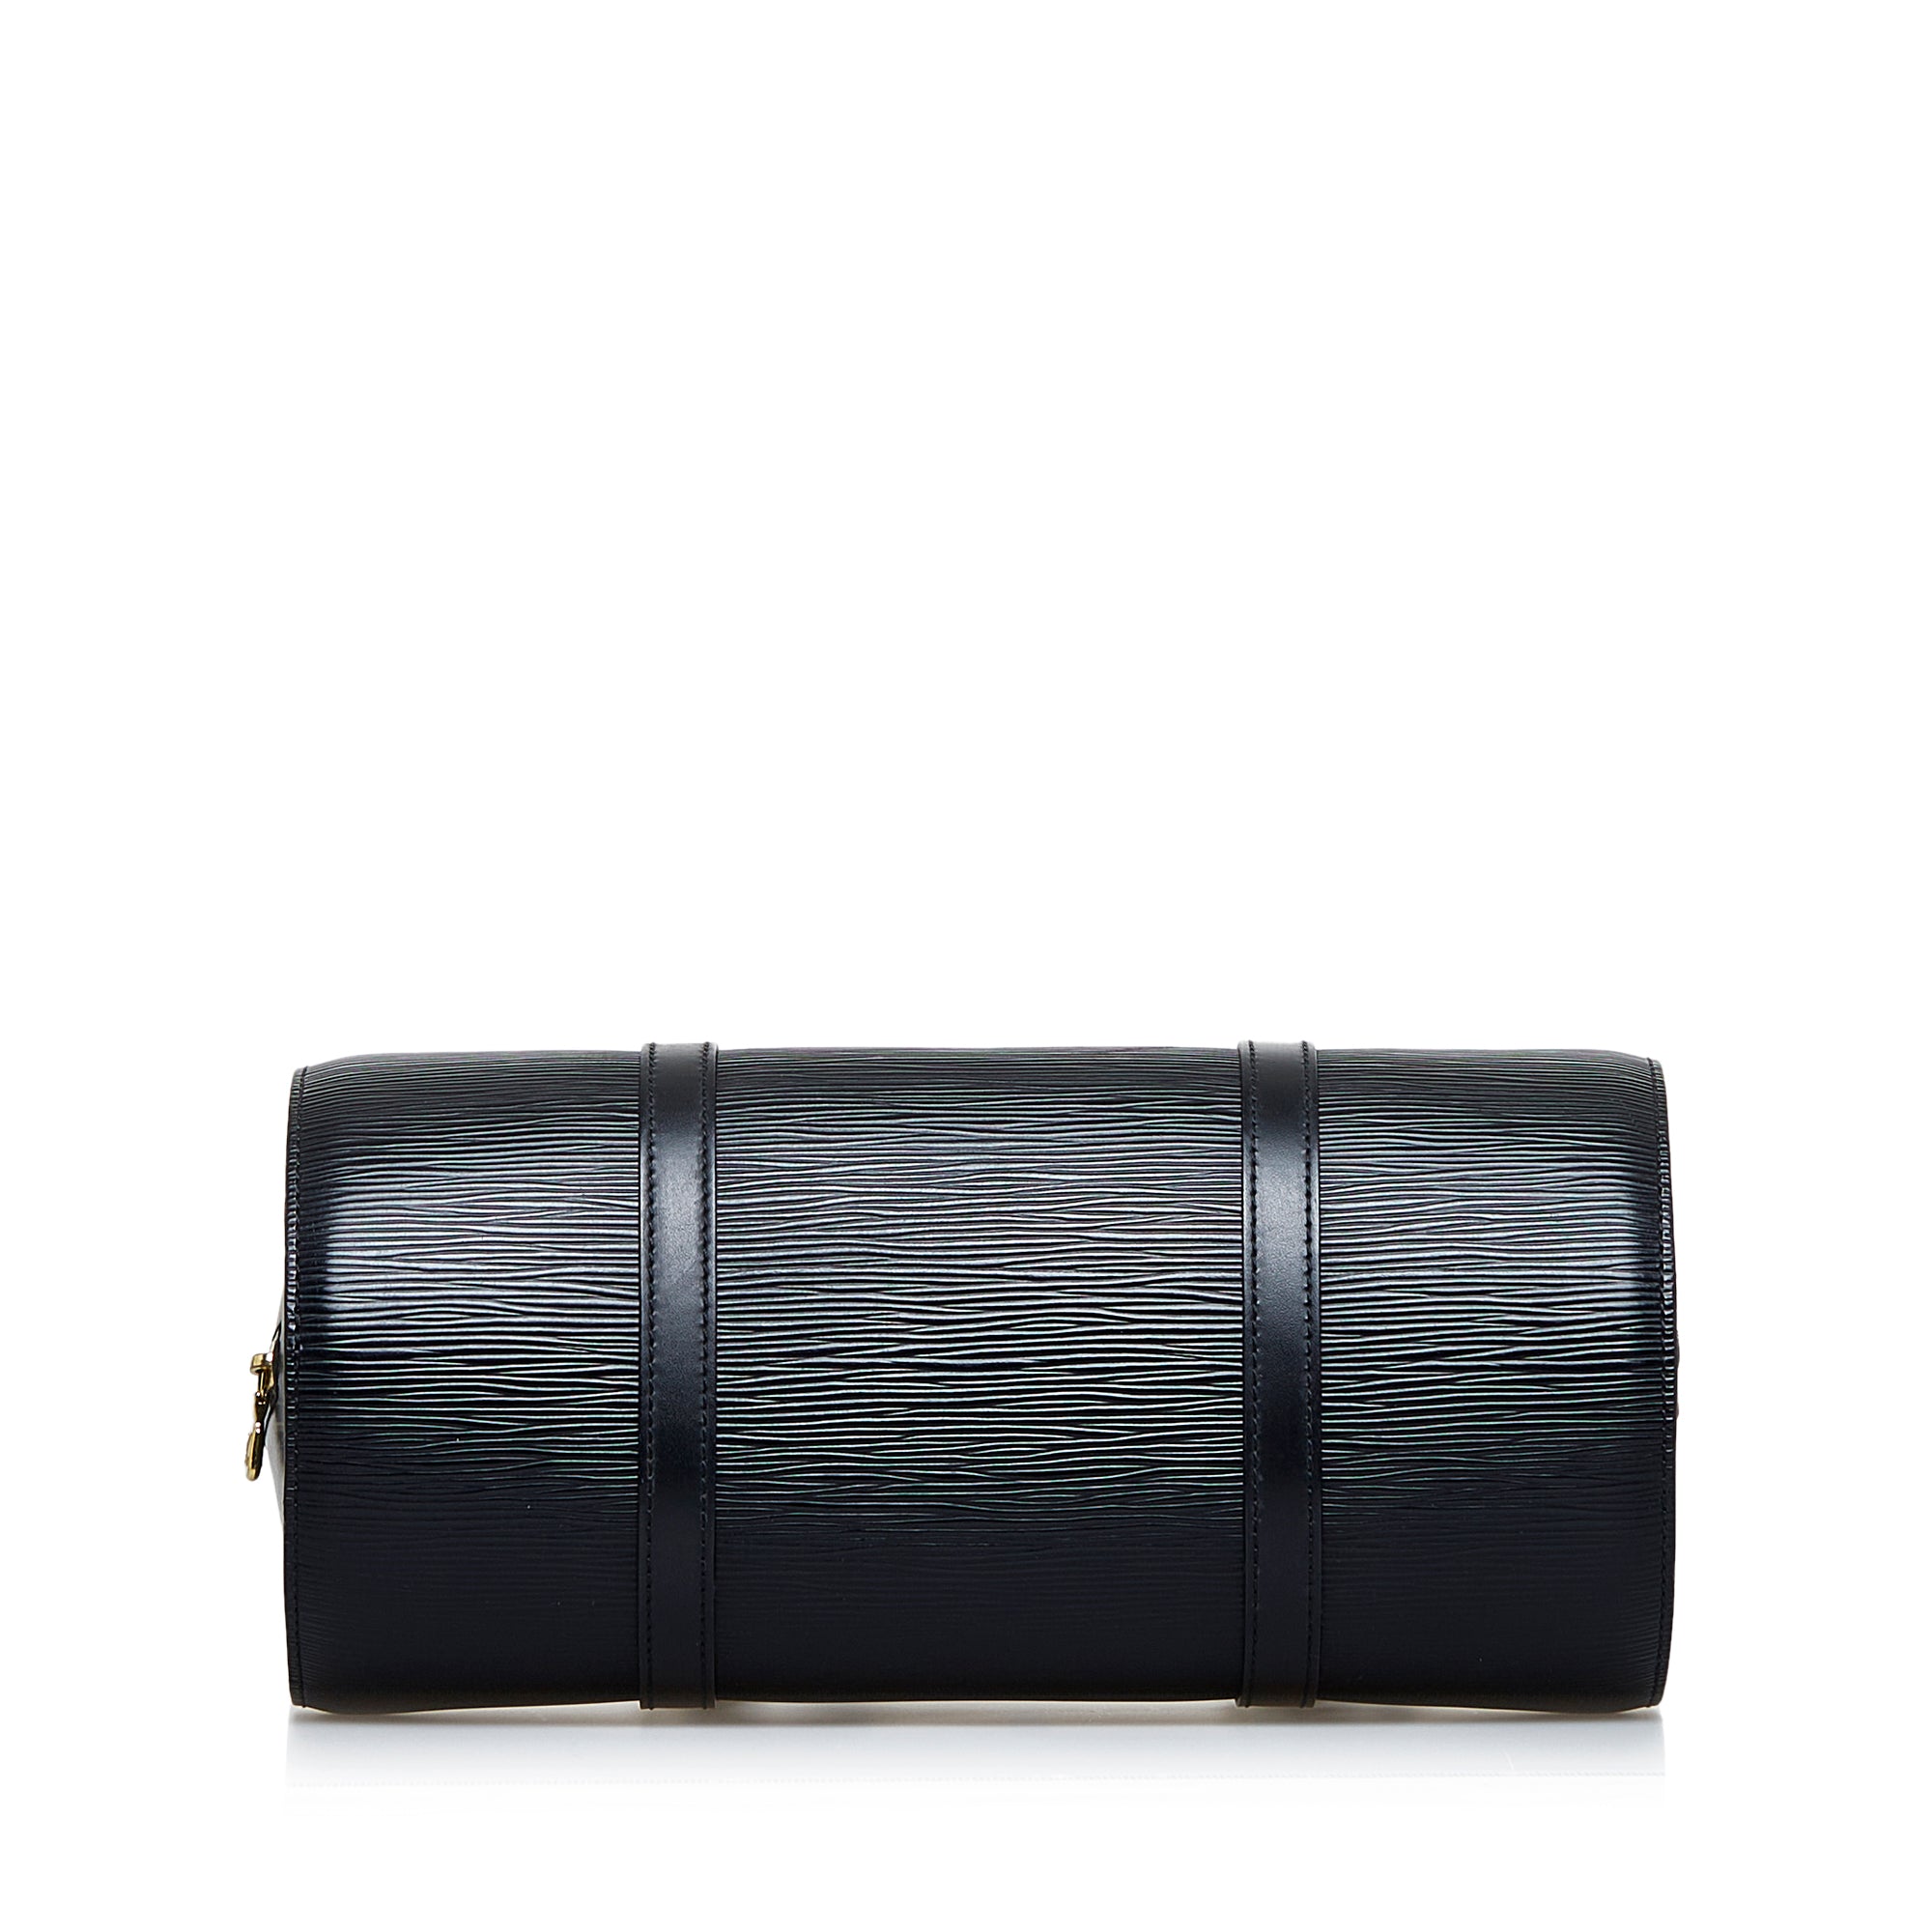 Louis Vuitton, Epi Soufflot handbag. in United States